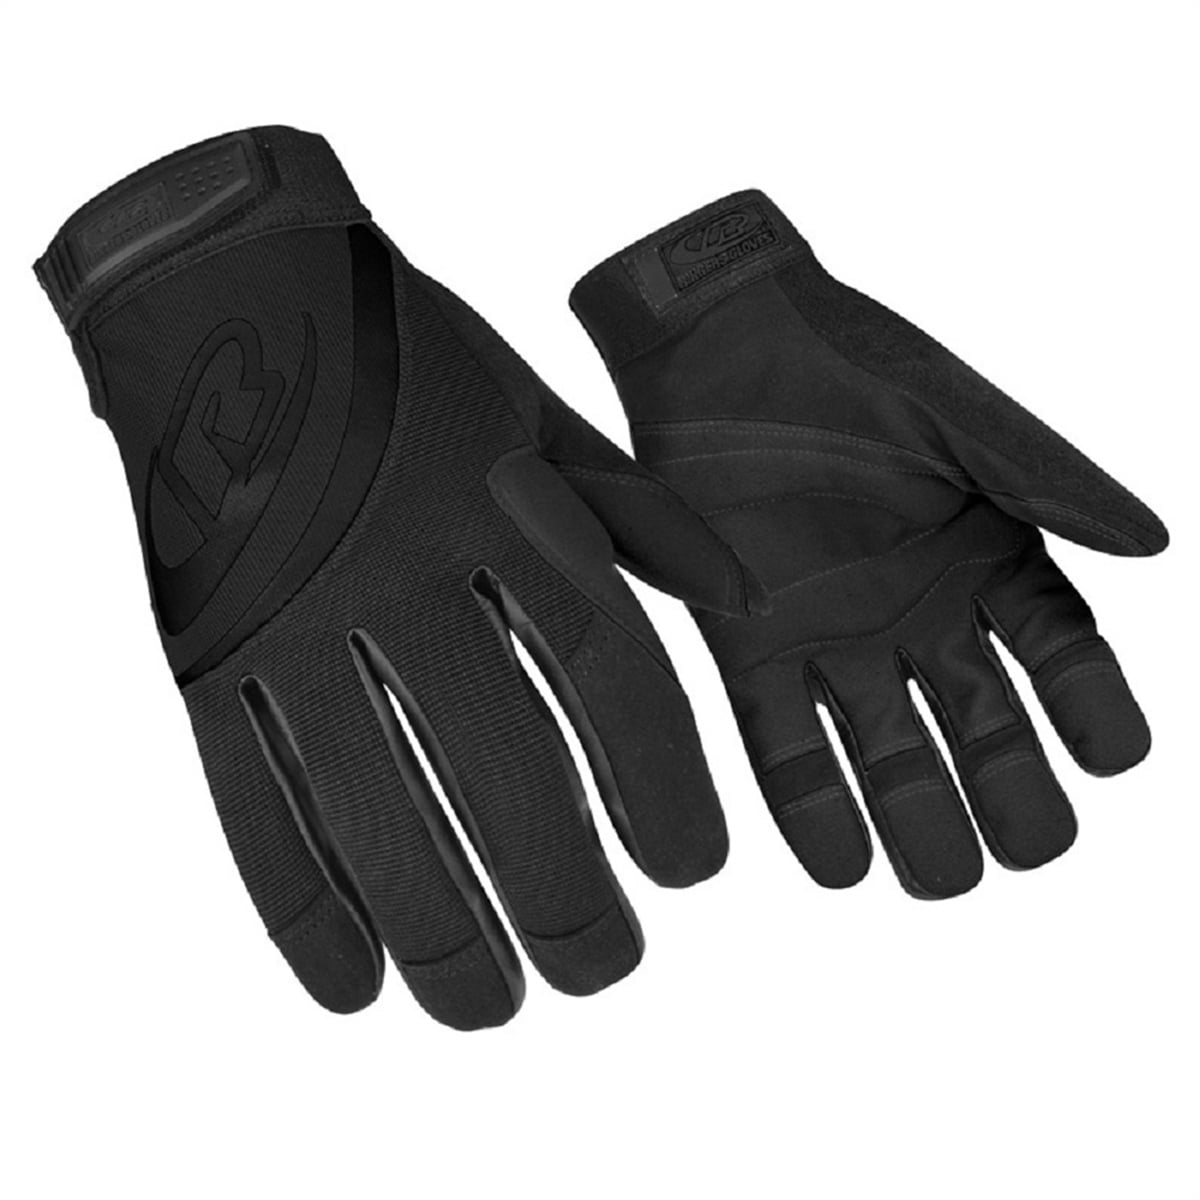 Ringers #306 Traffic Control Hi Vis Reflective Gloves Choose Size Med-XL NWT 